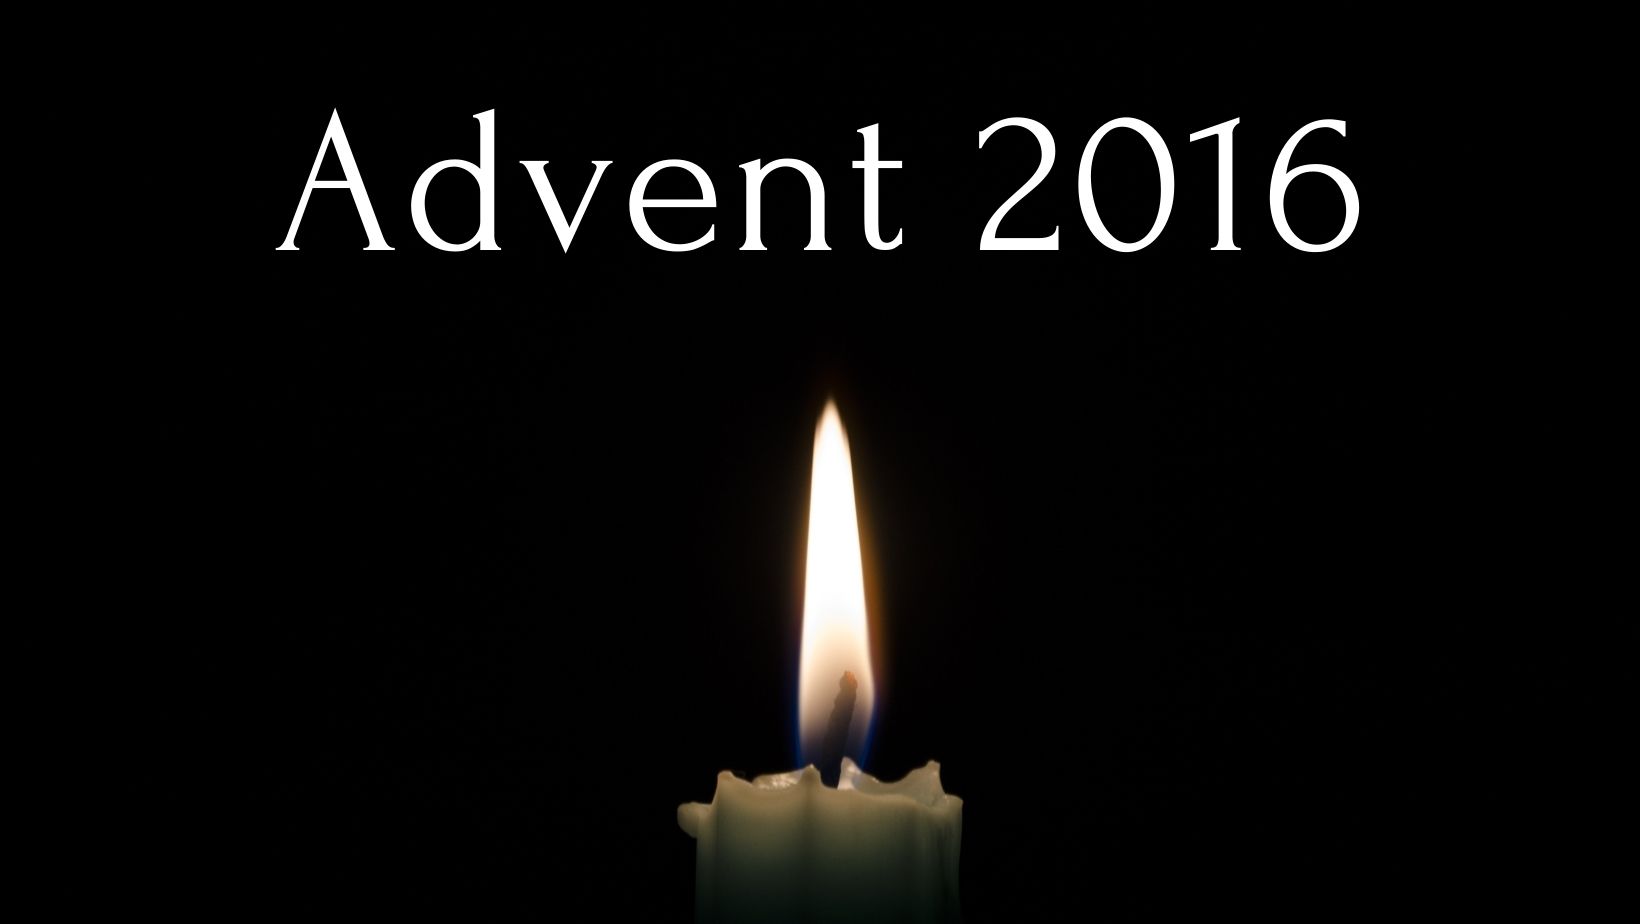 Advent 2016 banner